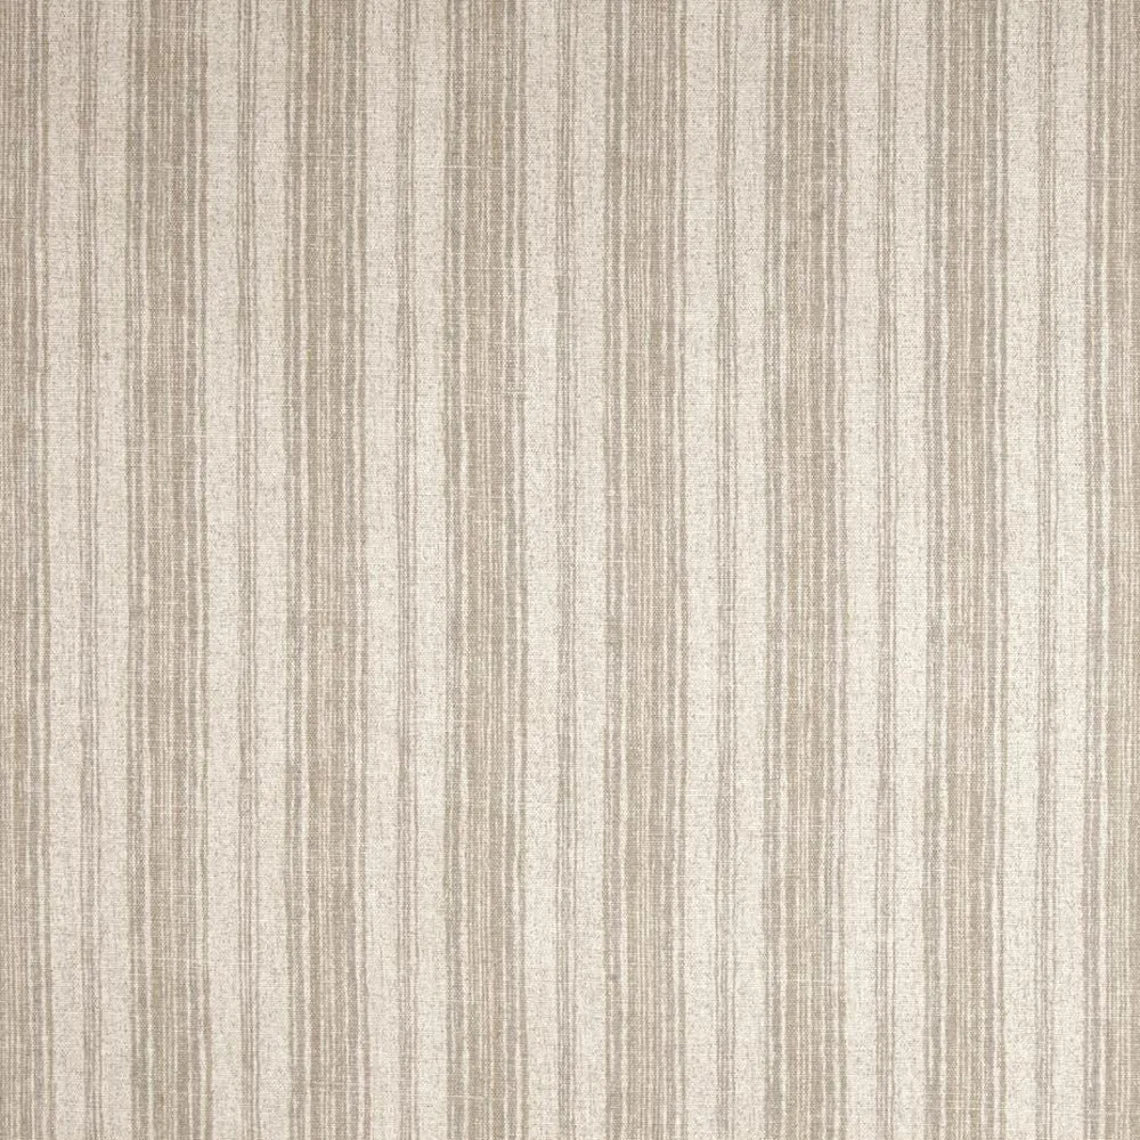 rod pocket curtain panels pair in brunswick stone beige stripe